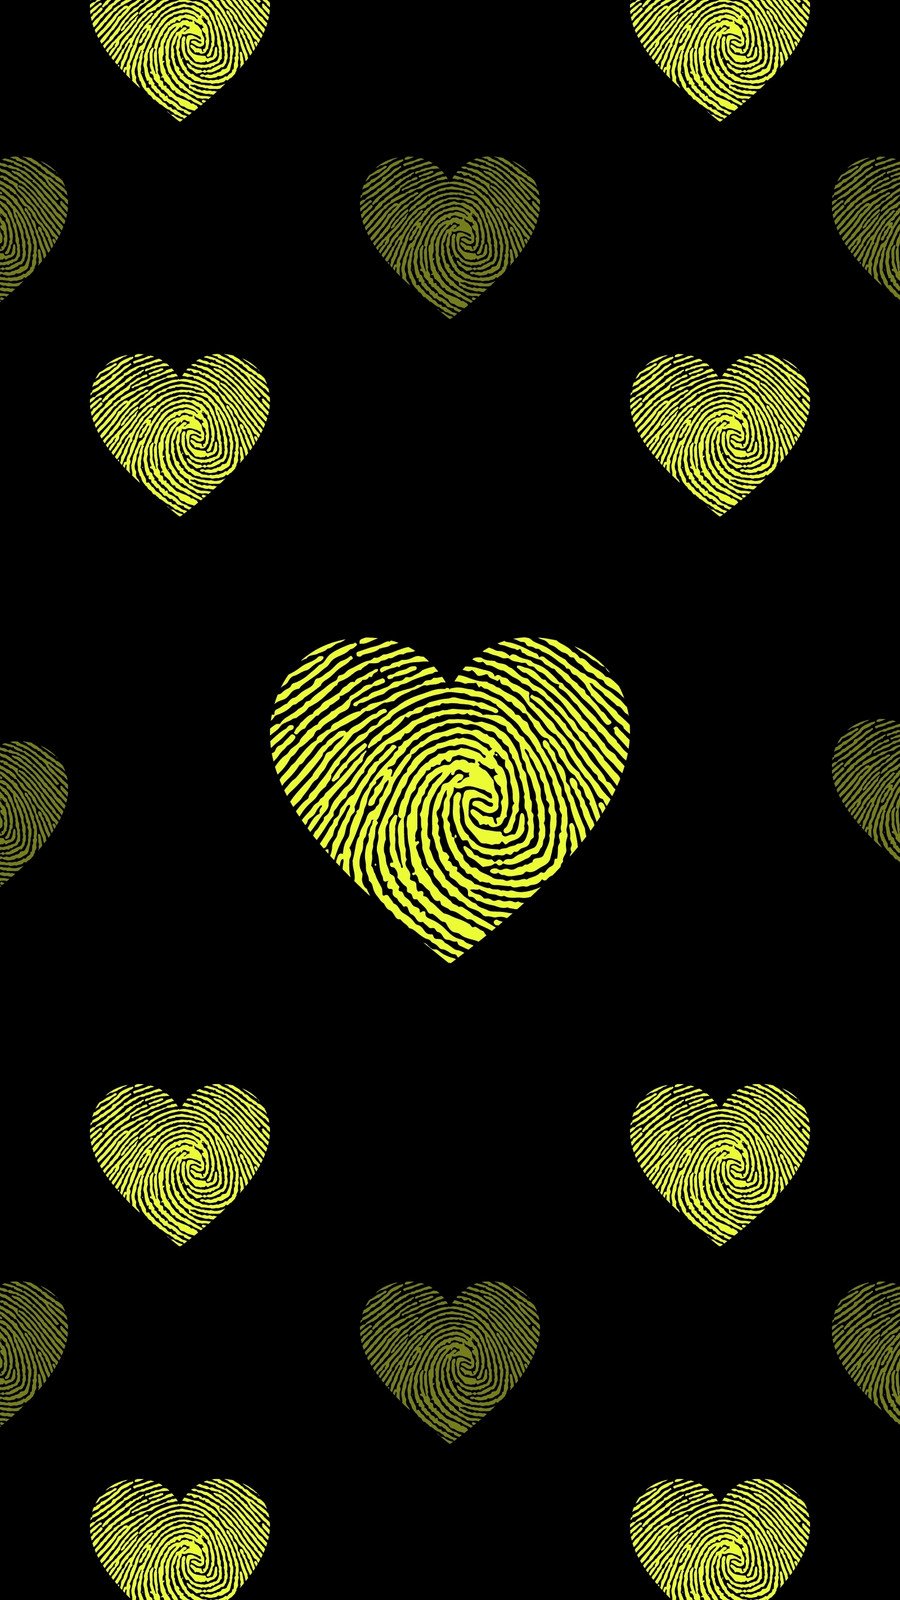 Love Heart With Free Hand Art HD Wallpaper